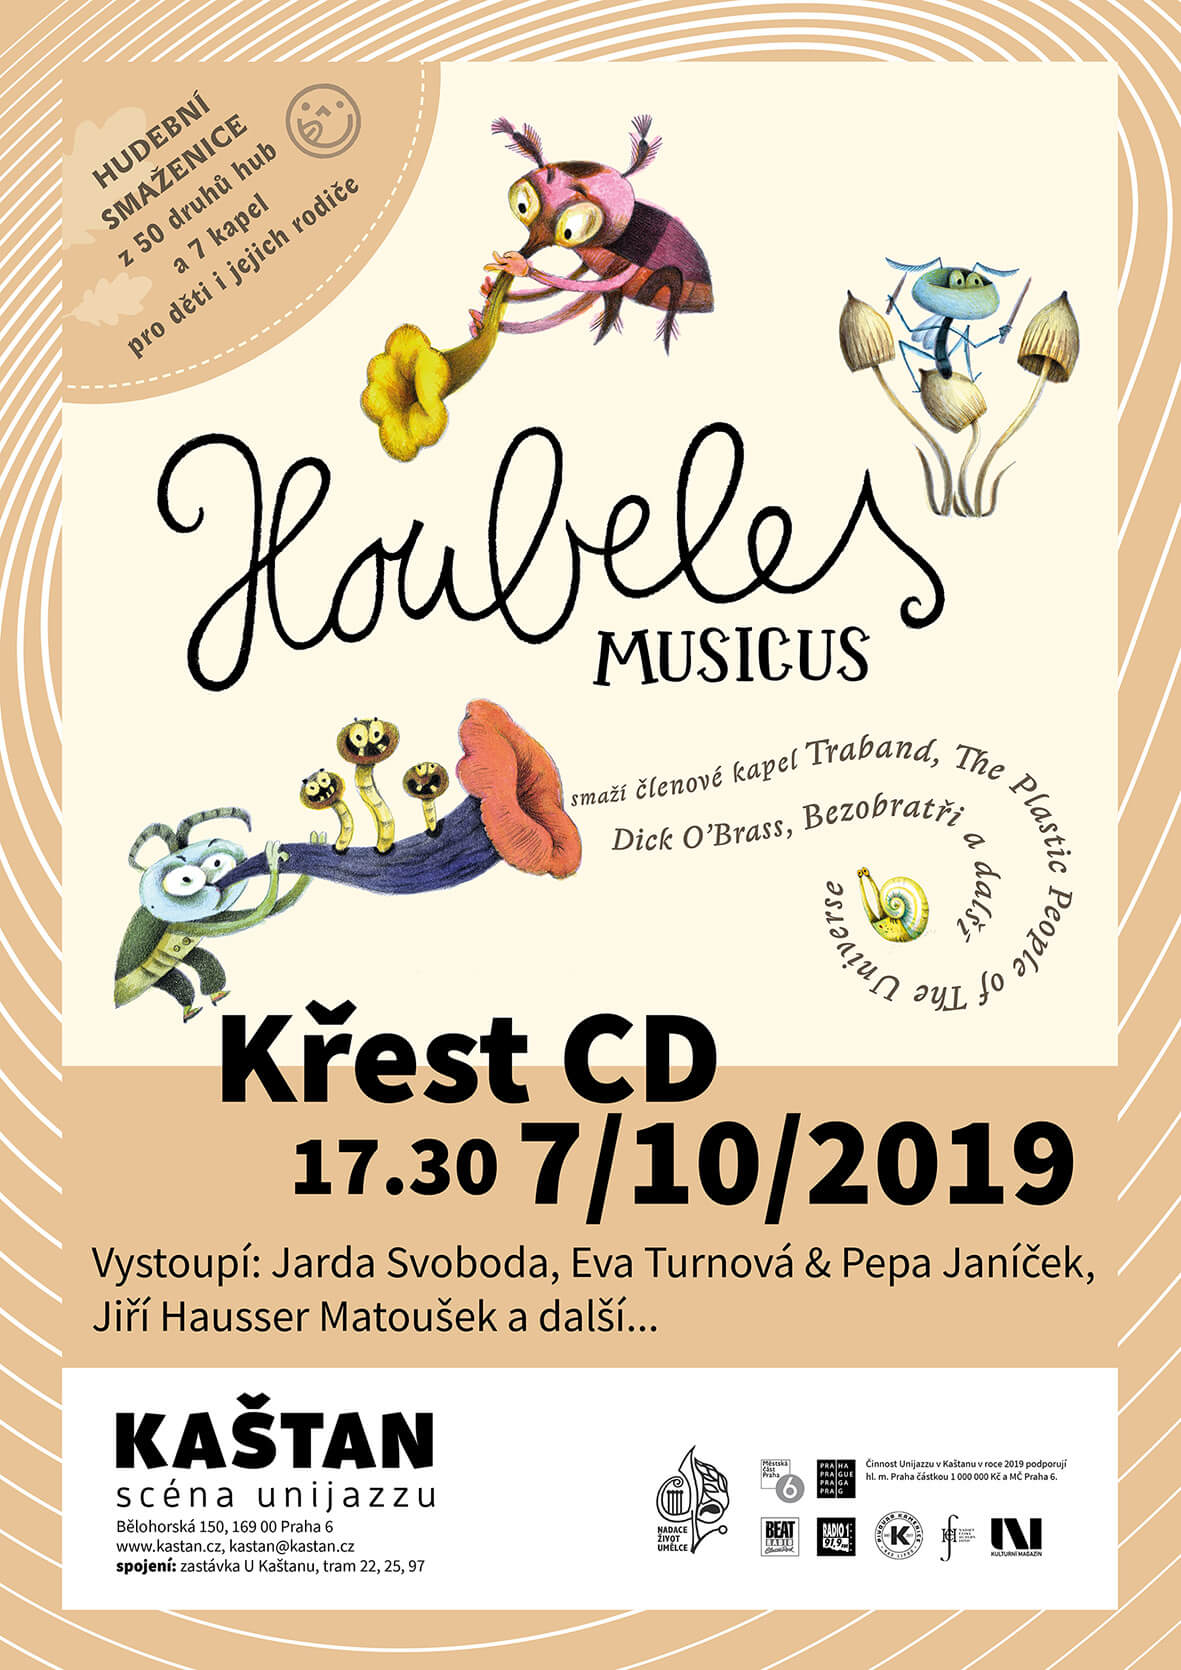 Houbeles Musicus křest CD - 7. 10. 2019 v 17:30, klub Kaštan (sc0na Unijazzu)